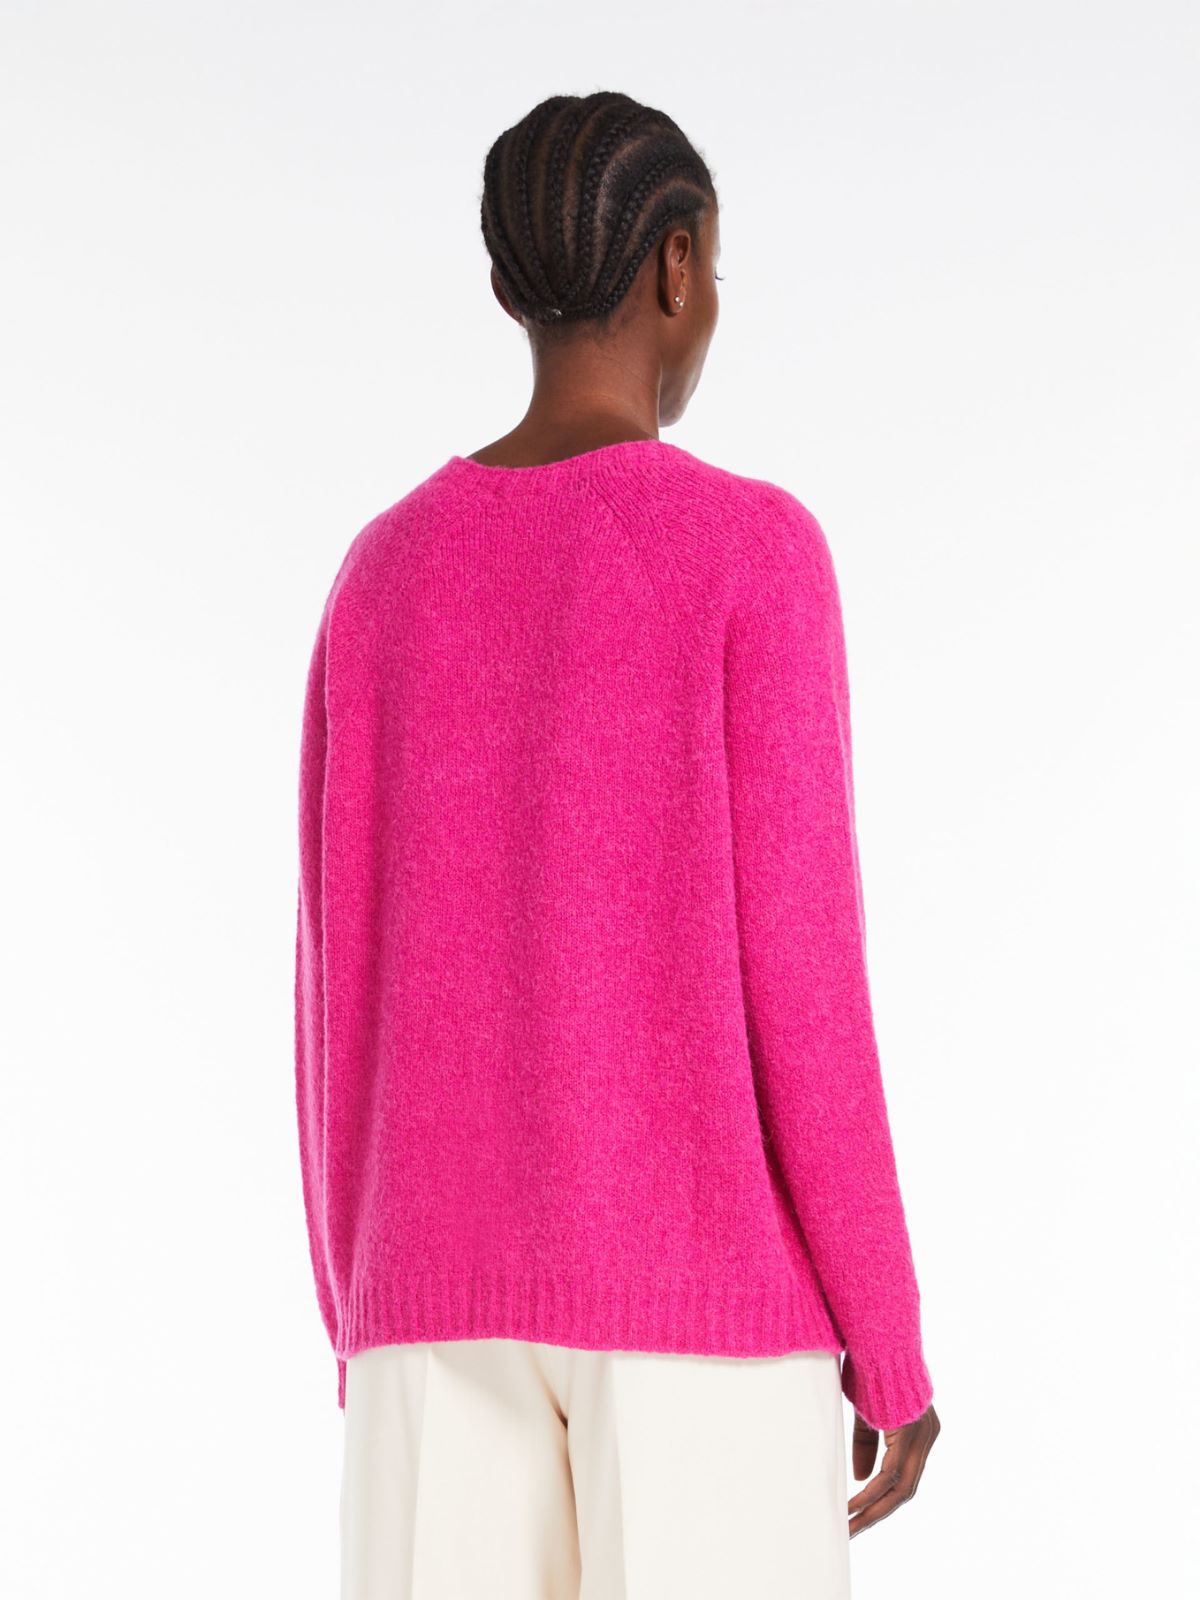 Soft knit top in alpaca and cotton - FUCHSIA - Weekend Max Mara - 3